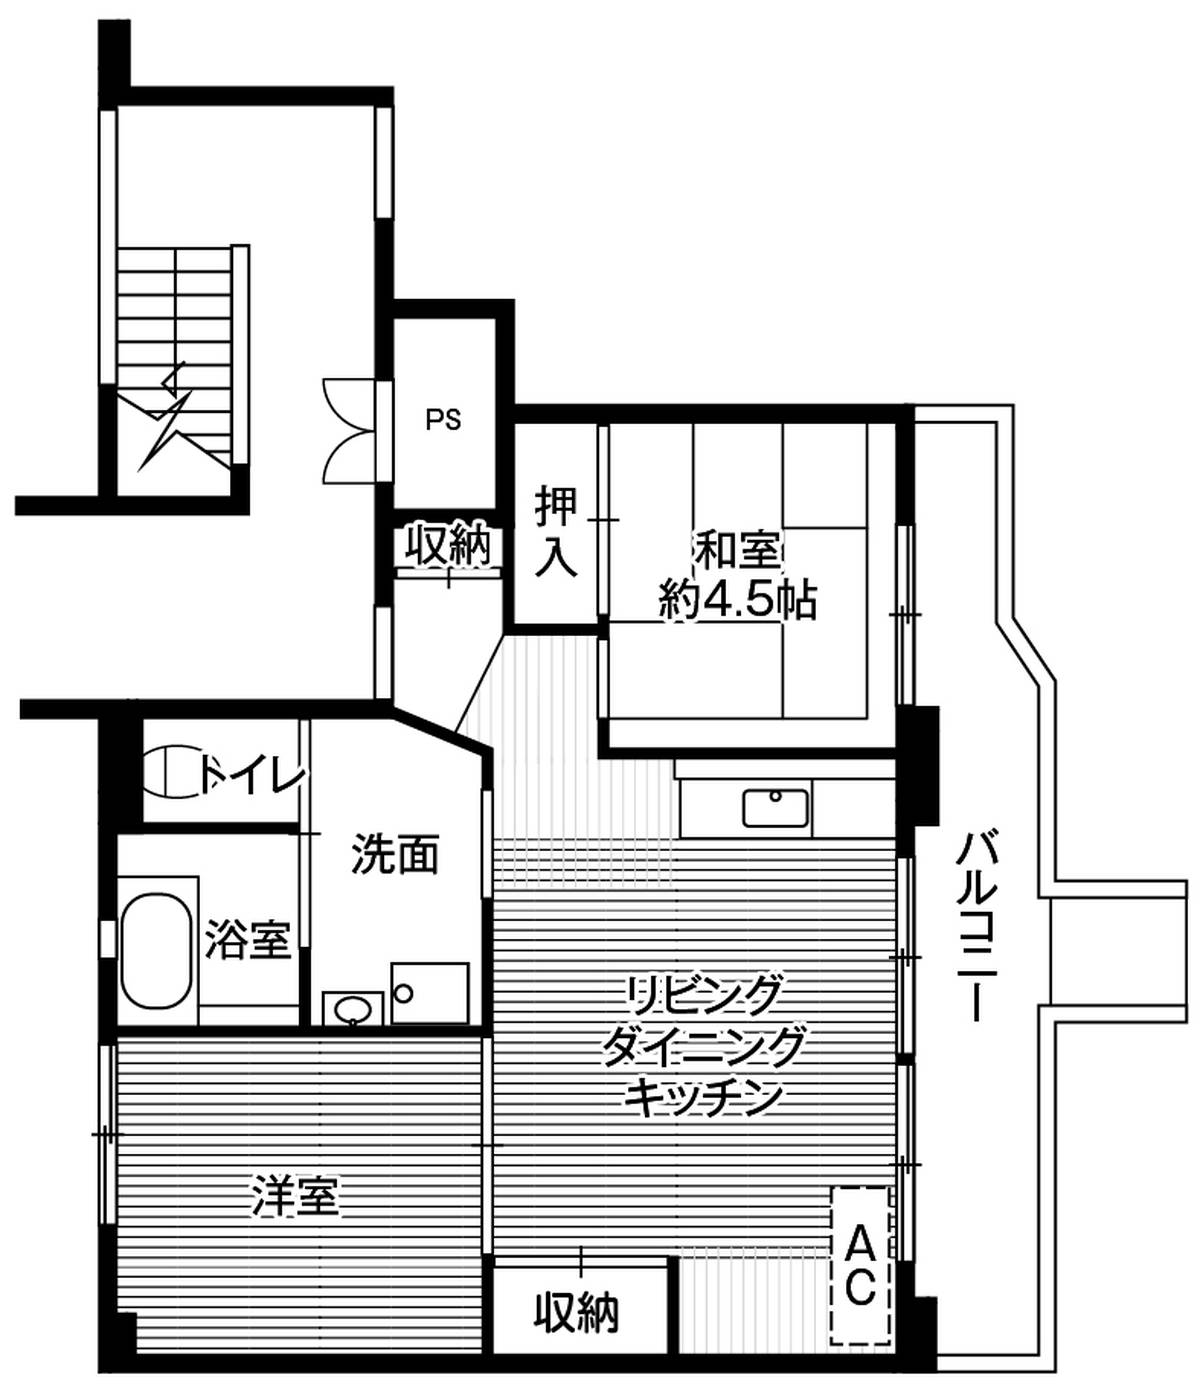 2LDK floorplan of Village House Yanagida Dai 2 in Himi-shi